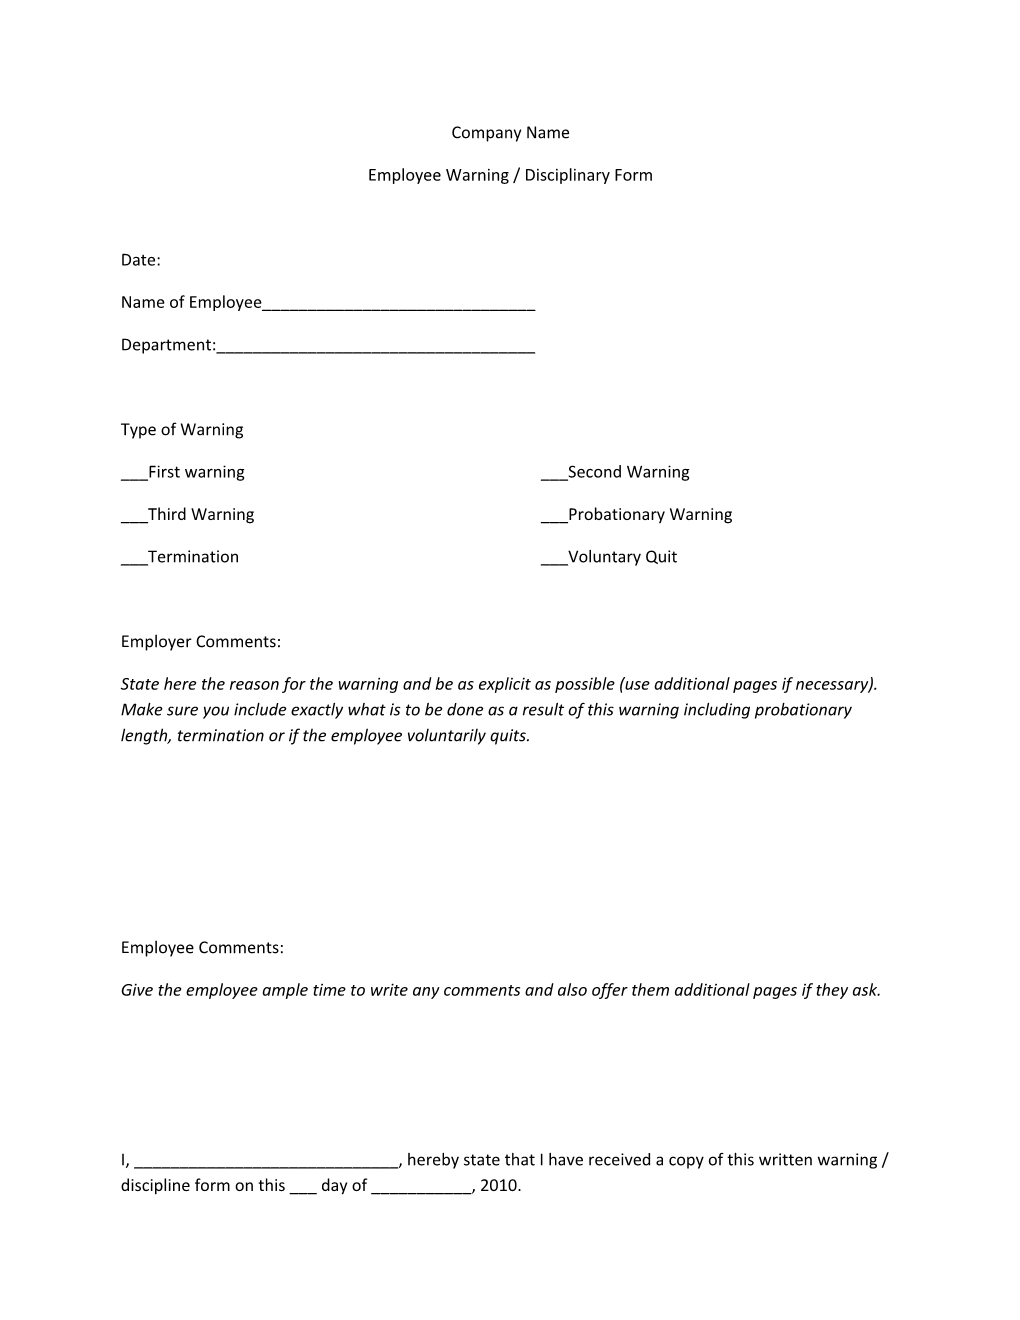 Employee Warning / Disciplinary Form